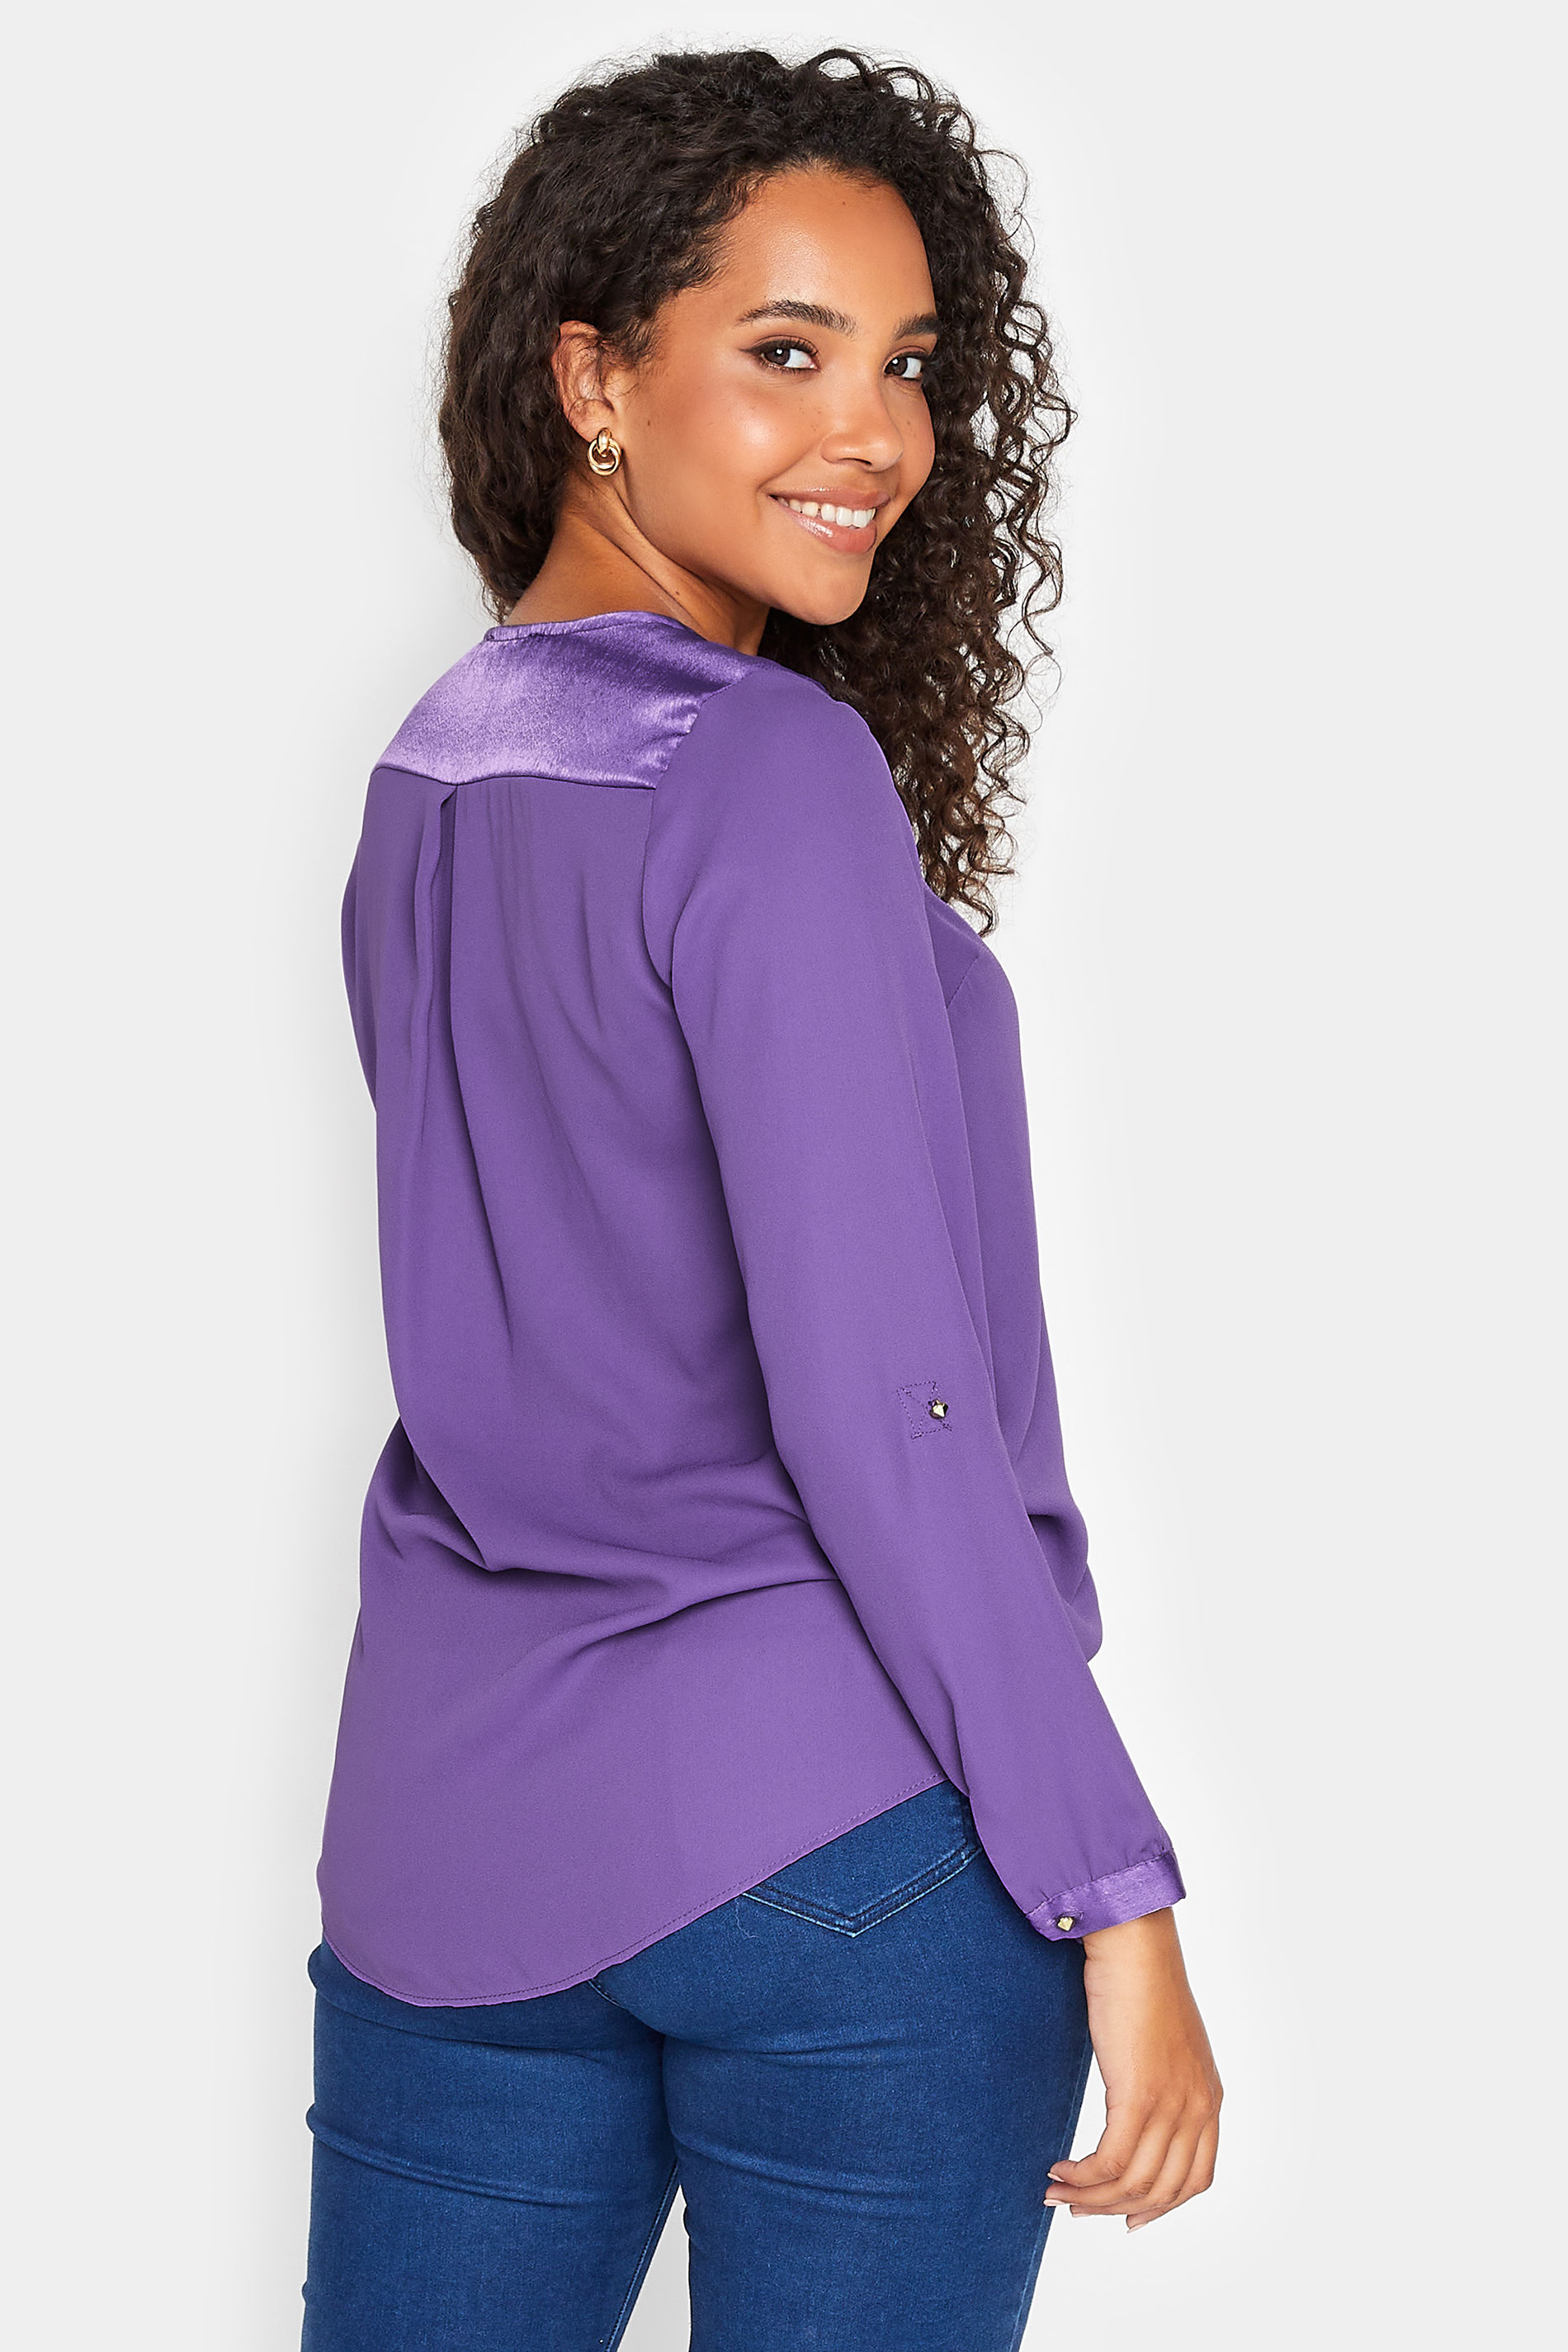 M&Co Purple Satin Contrast Panel Shirt | M&Co 3